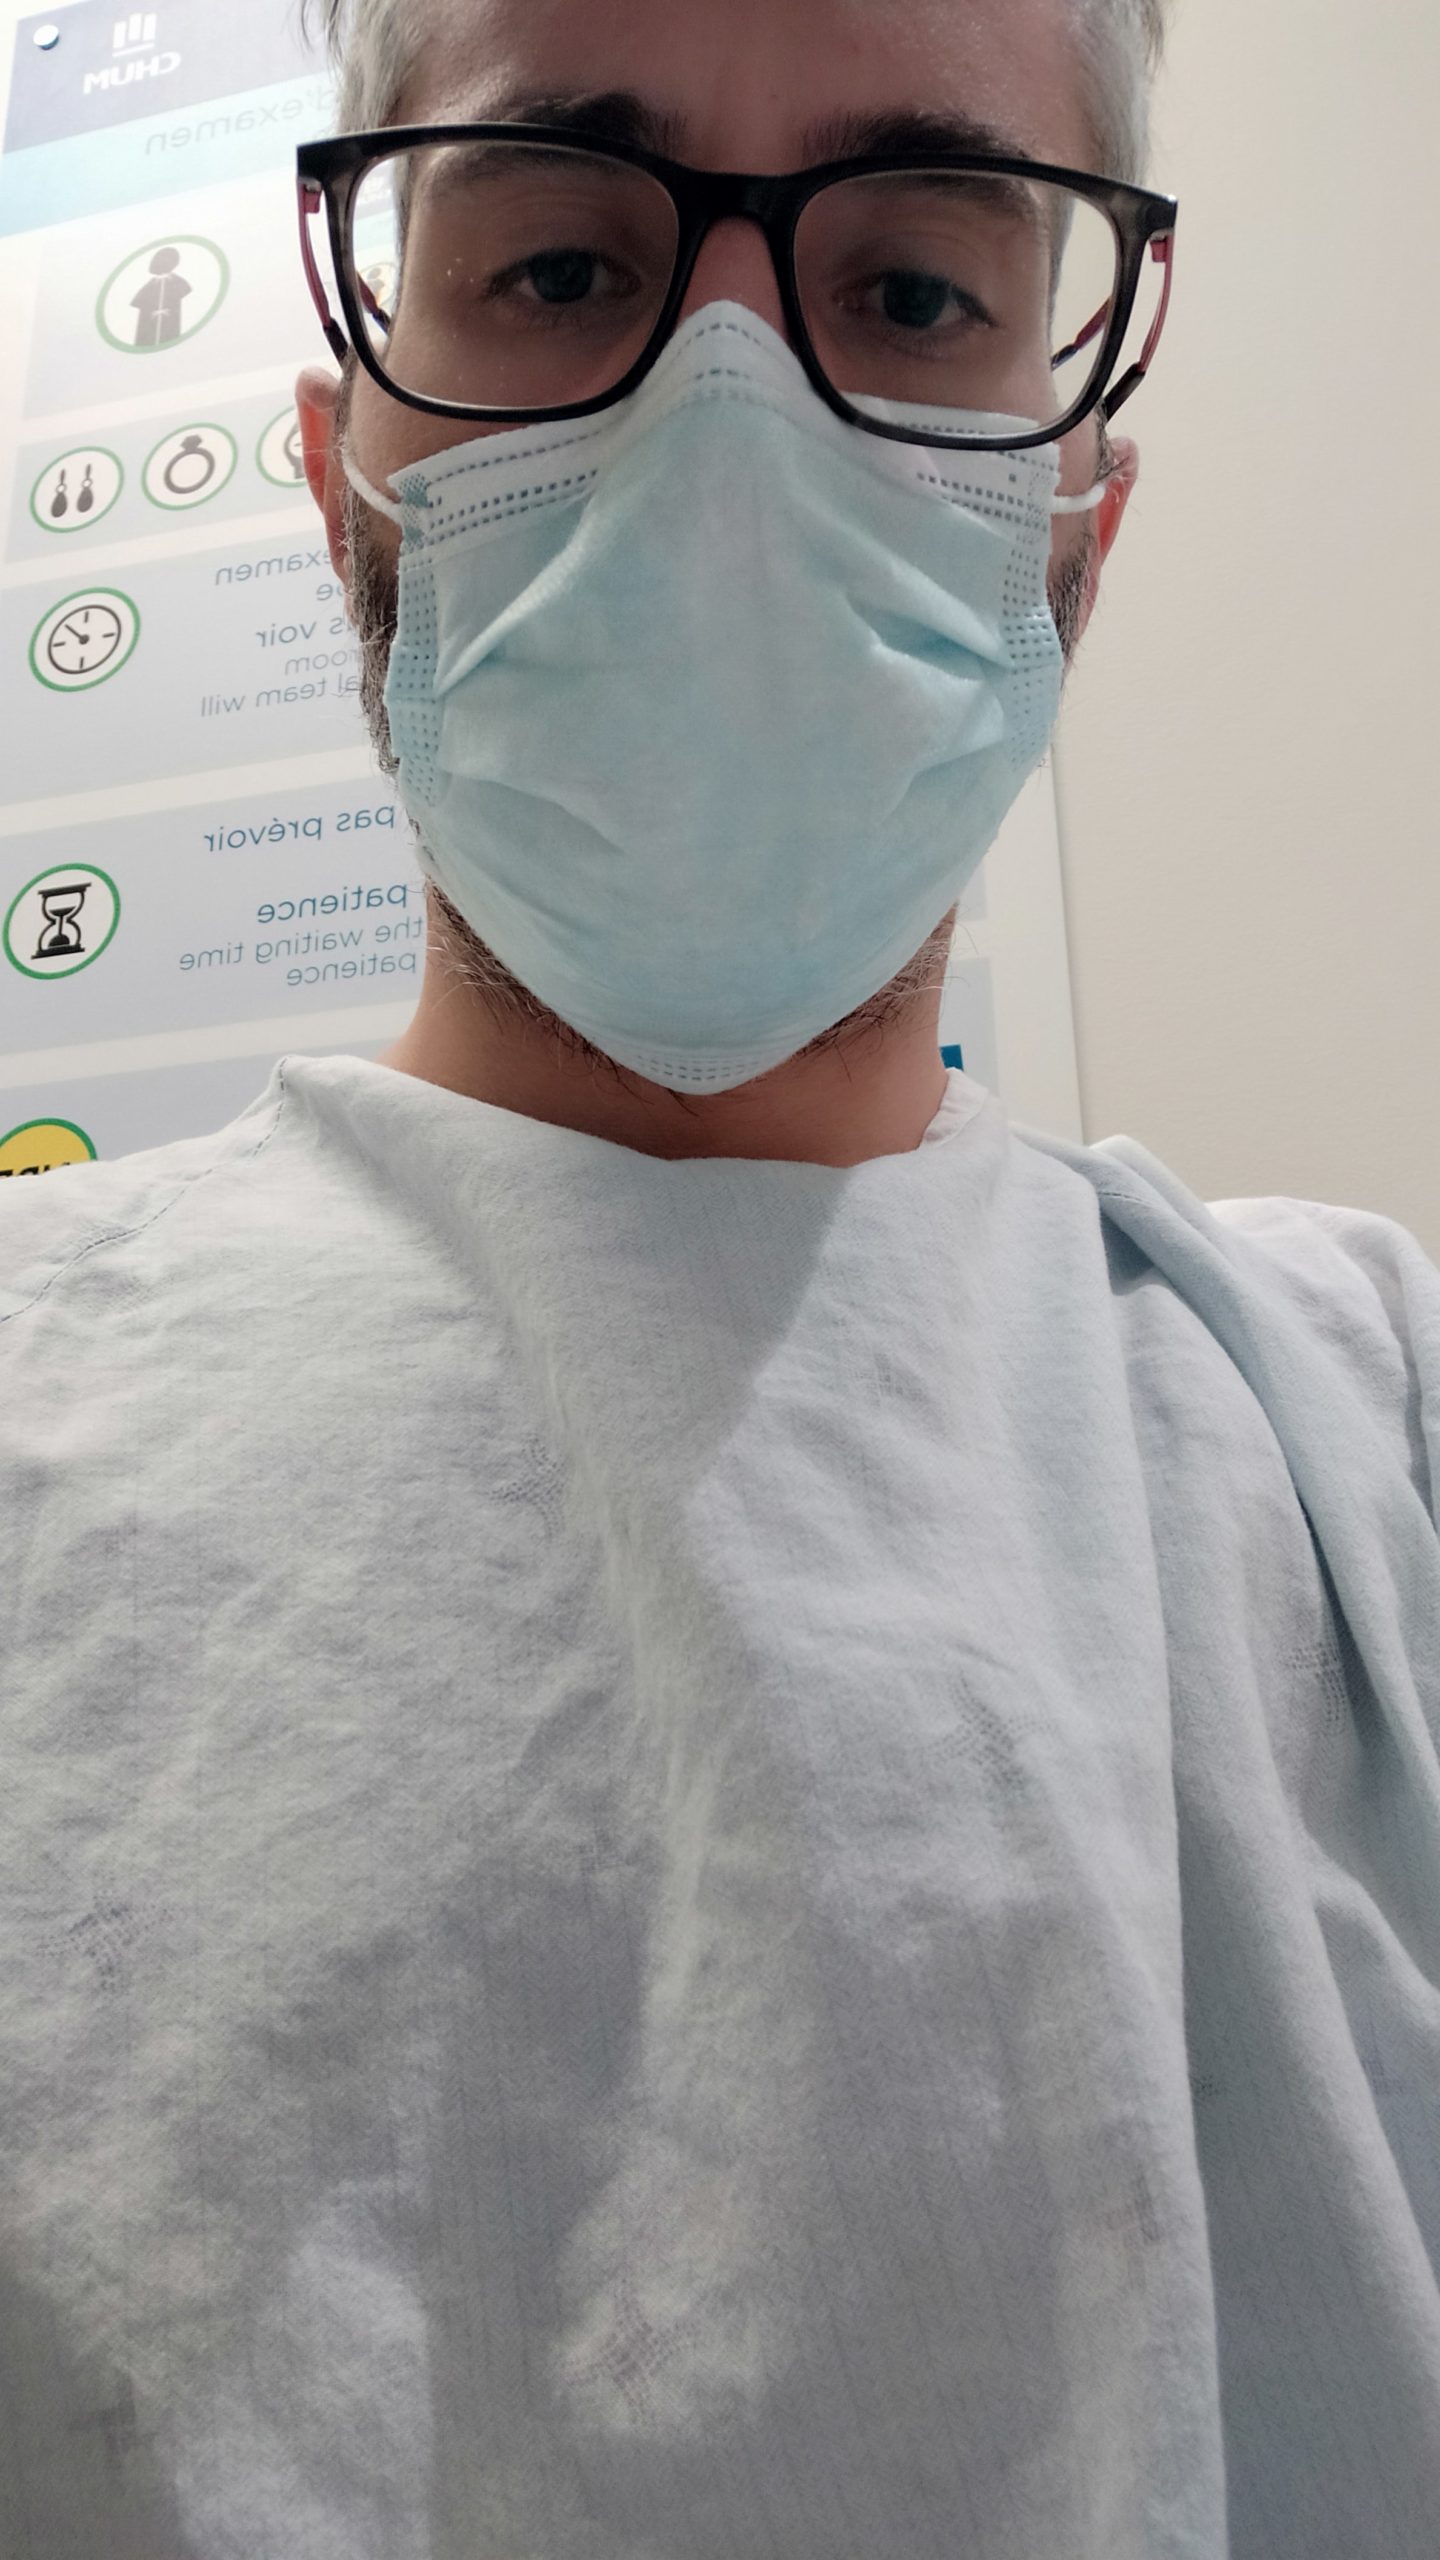 selfie en blouse d'hôpital, la mine fatiguée